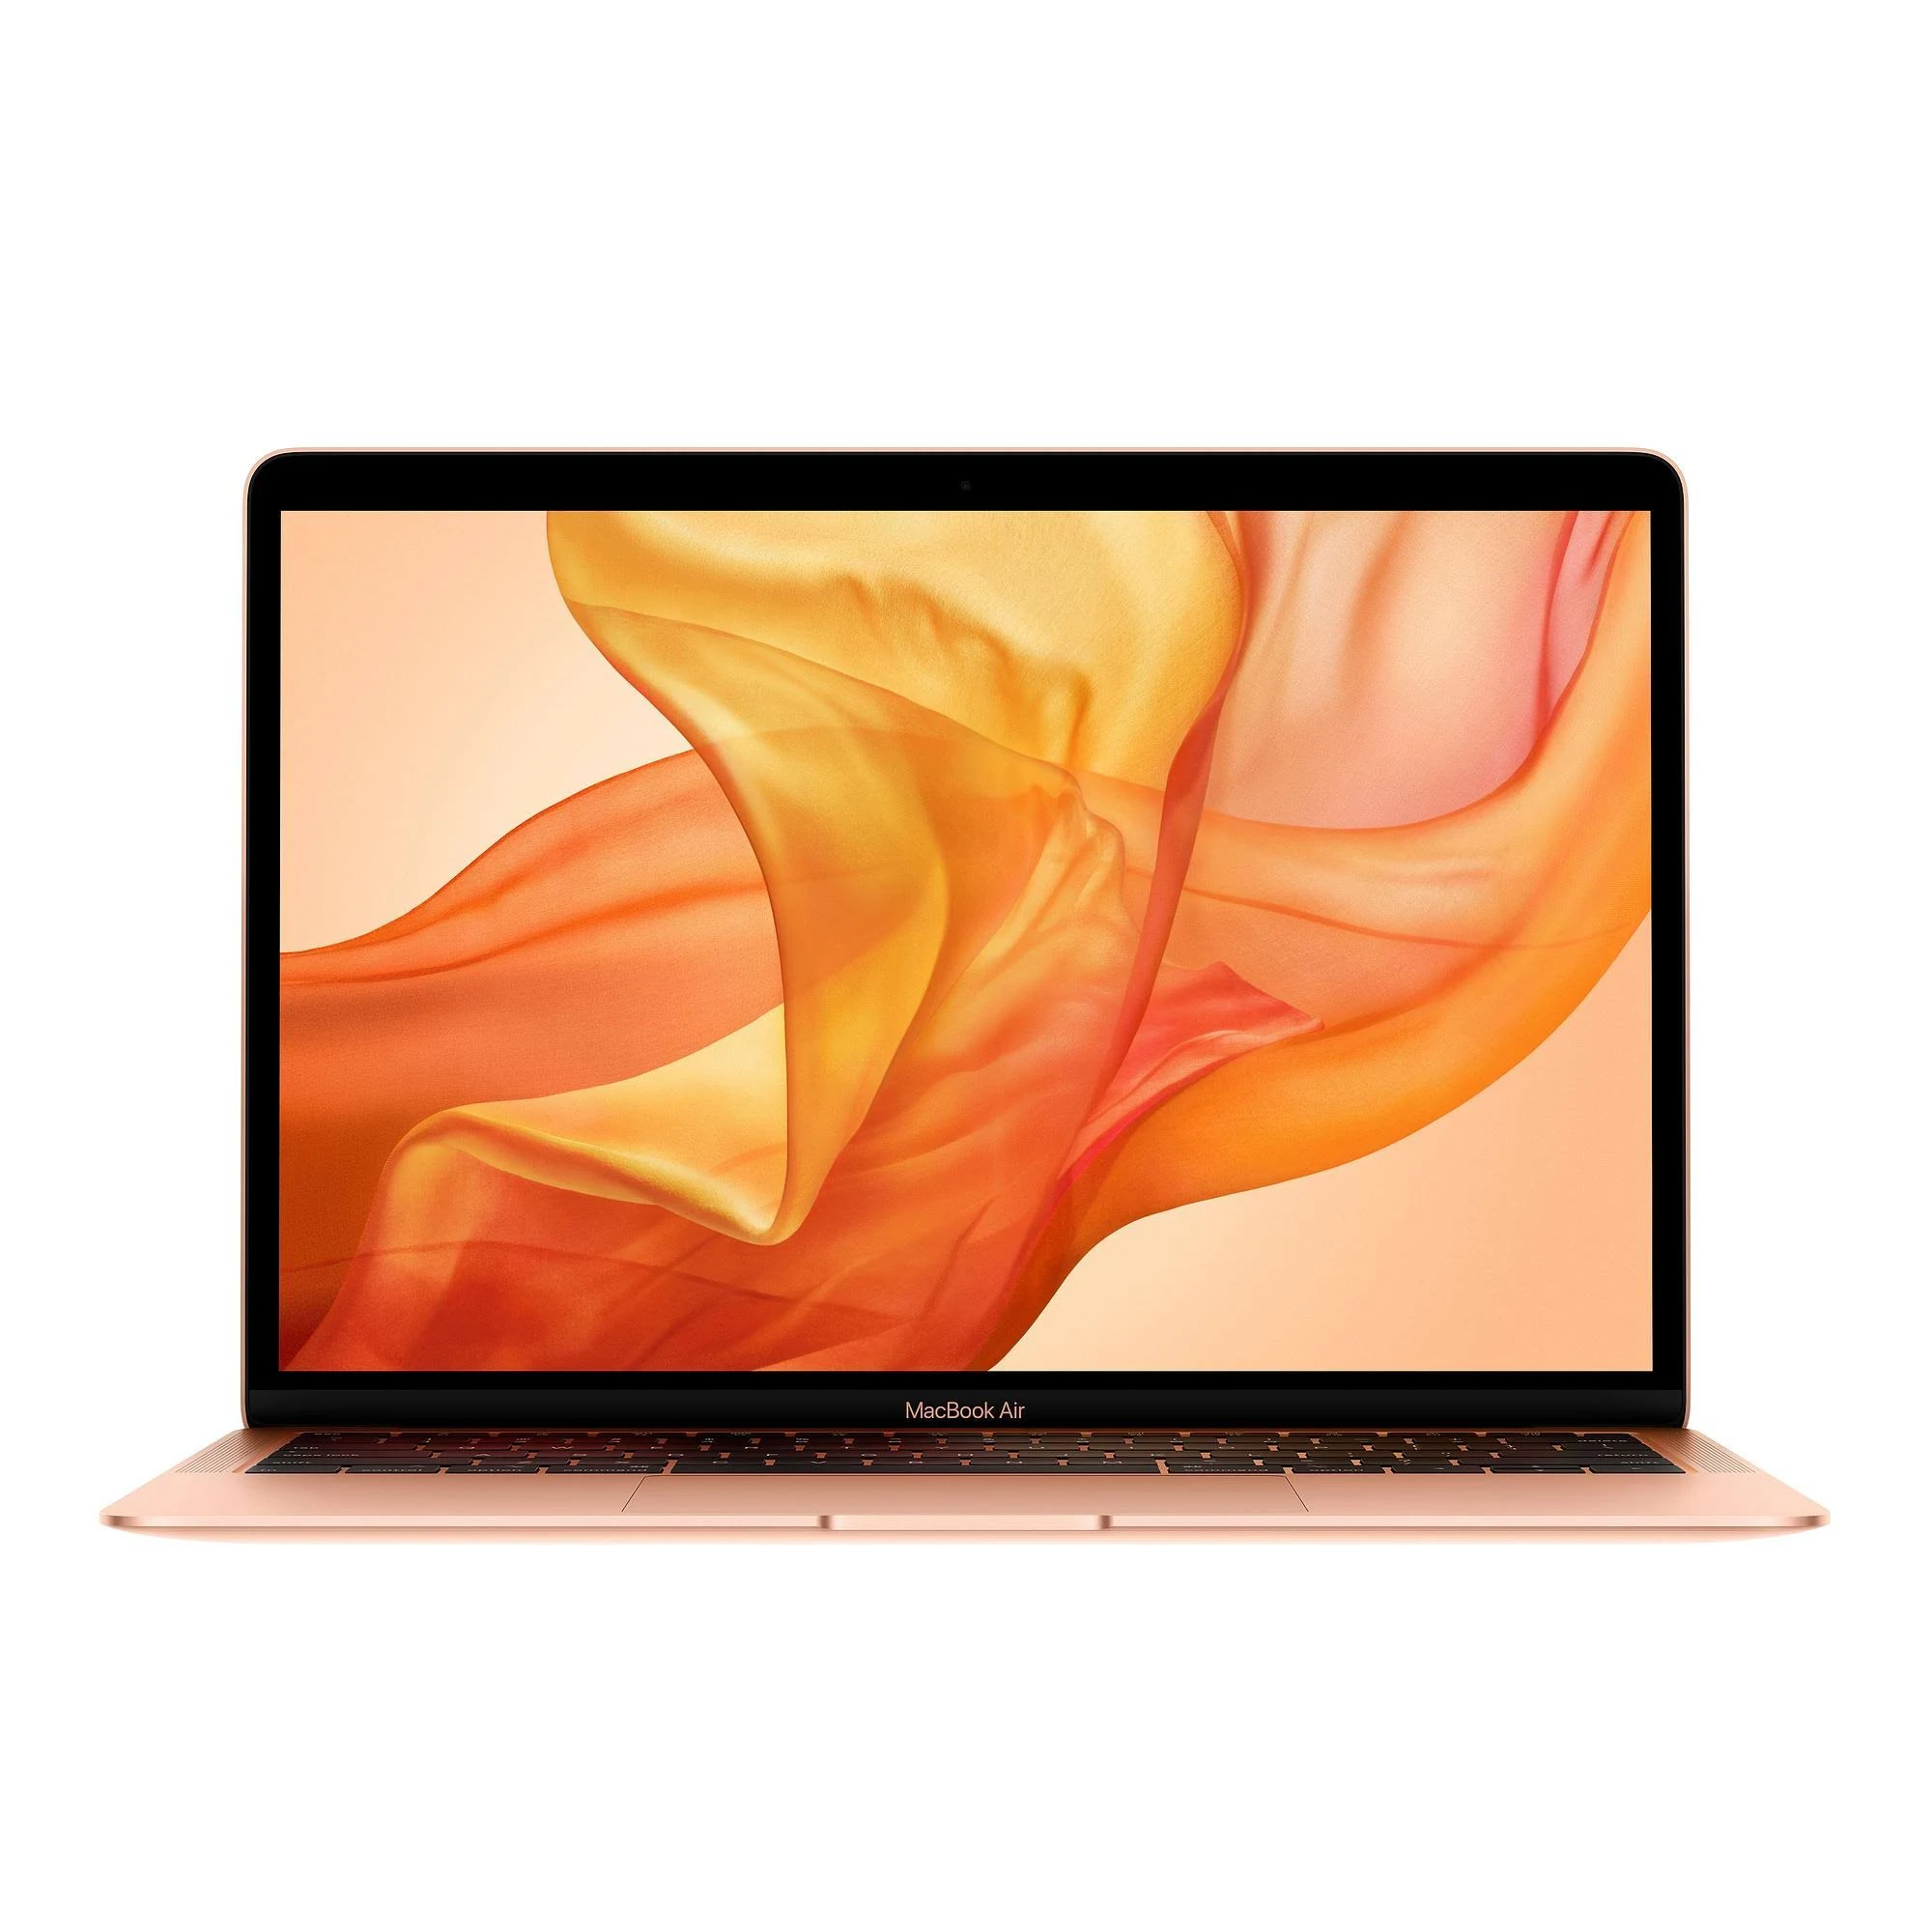 MacBook Air 13 inch True Tone 2019 i5 1.6GHz - 256GB SSD - 8GB Ram 256GB Gold Pristine